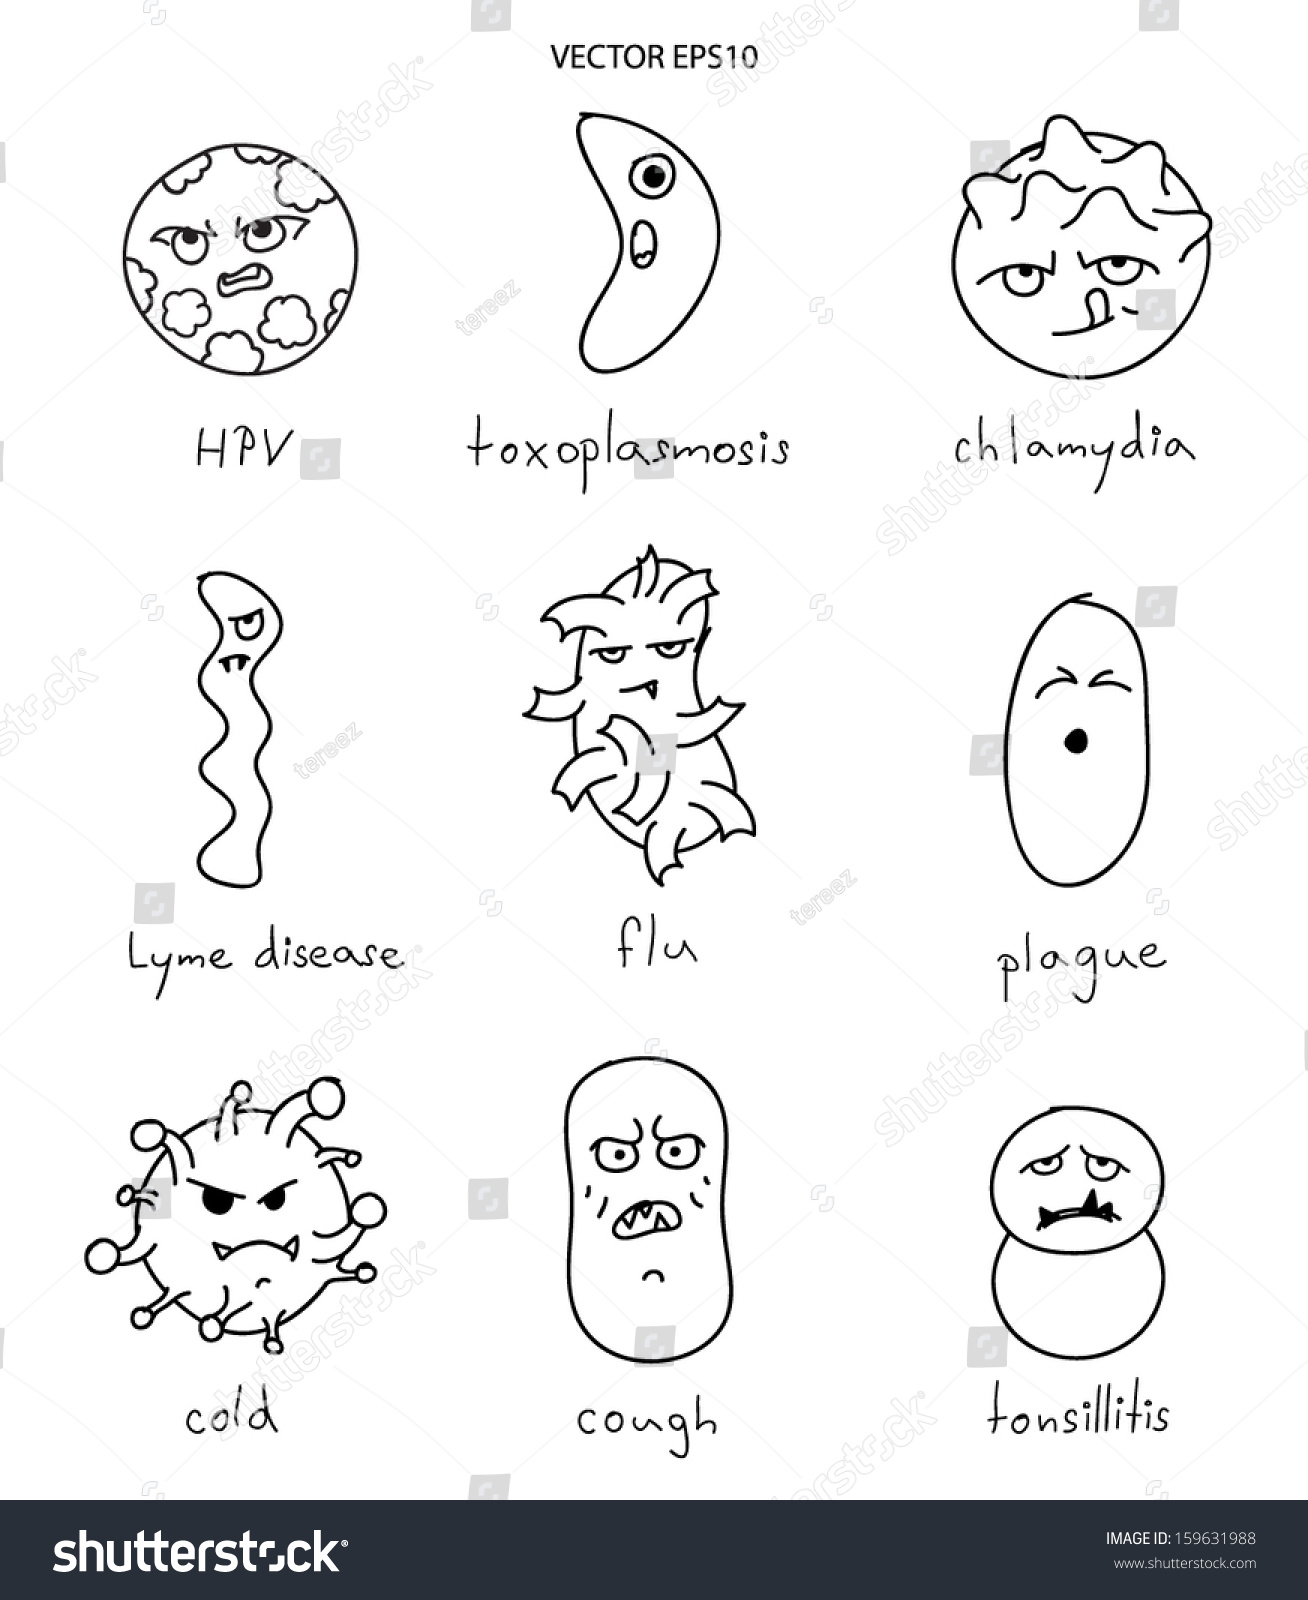 Drawing Of Viruses Causing Diseases Vector 159631988 Shutterstock